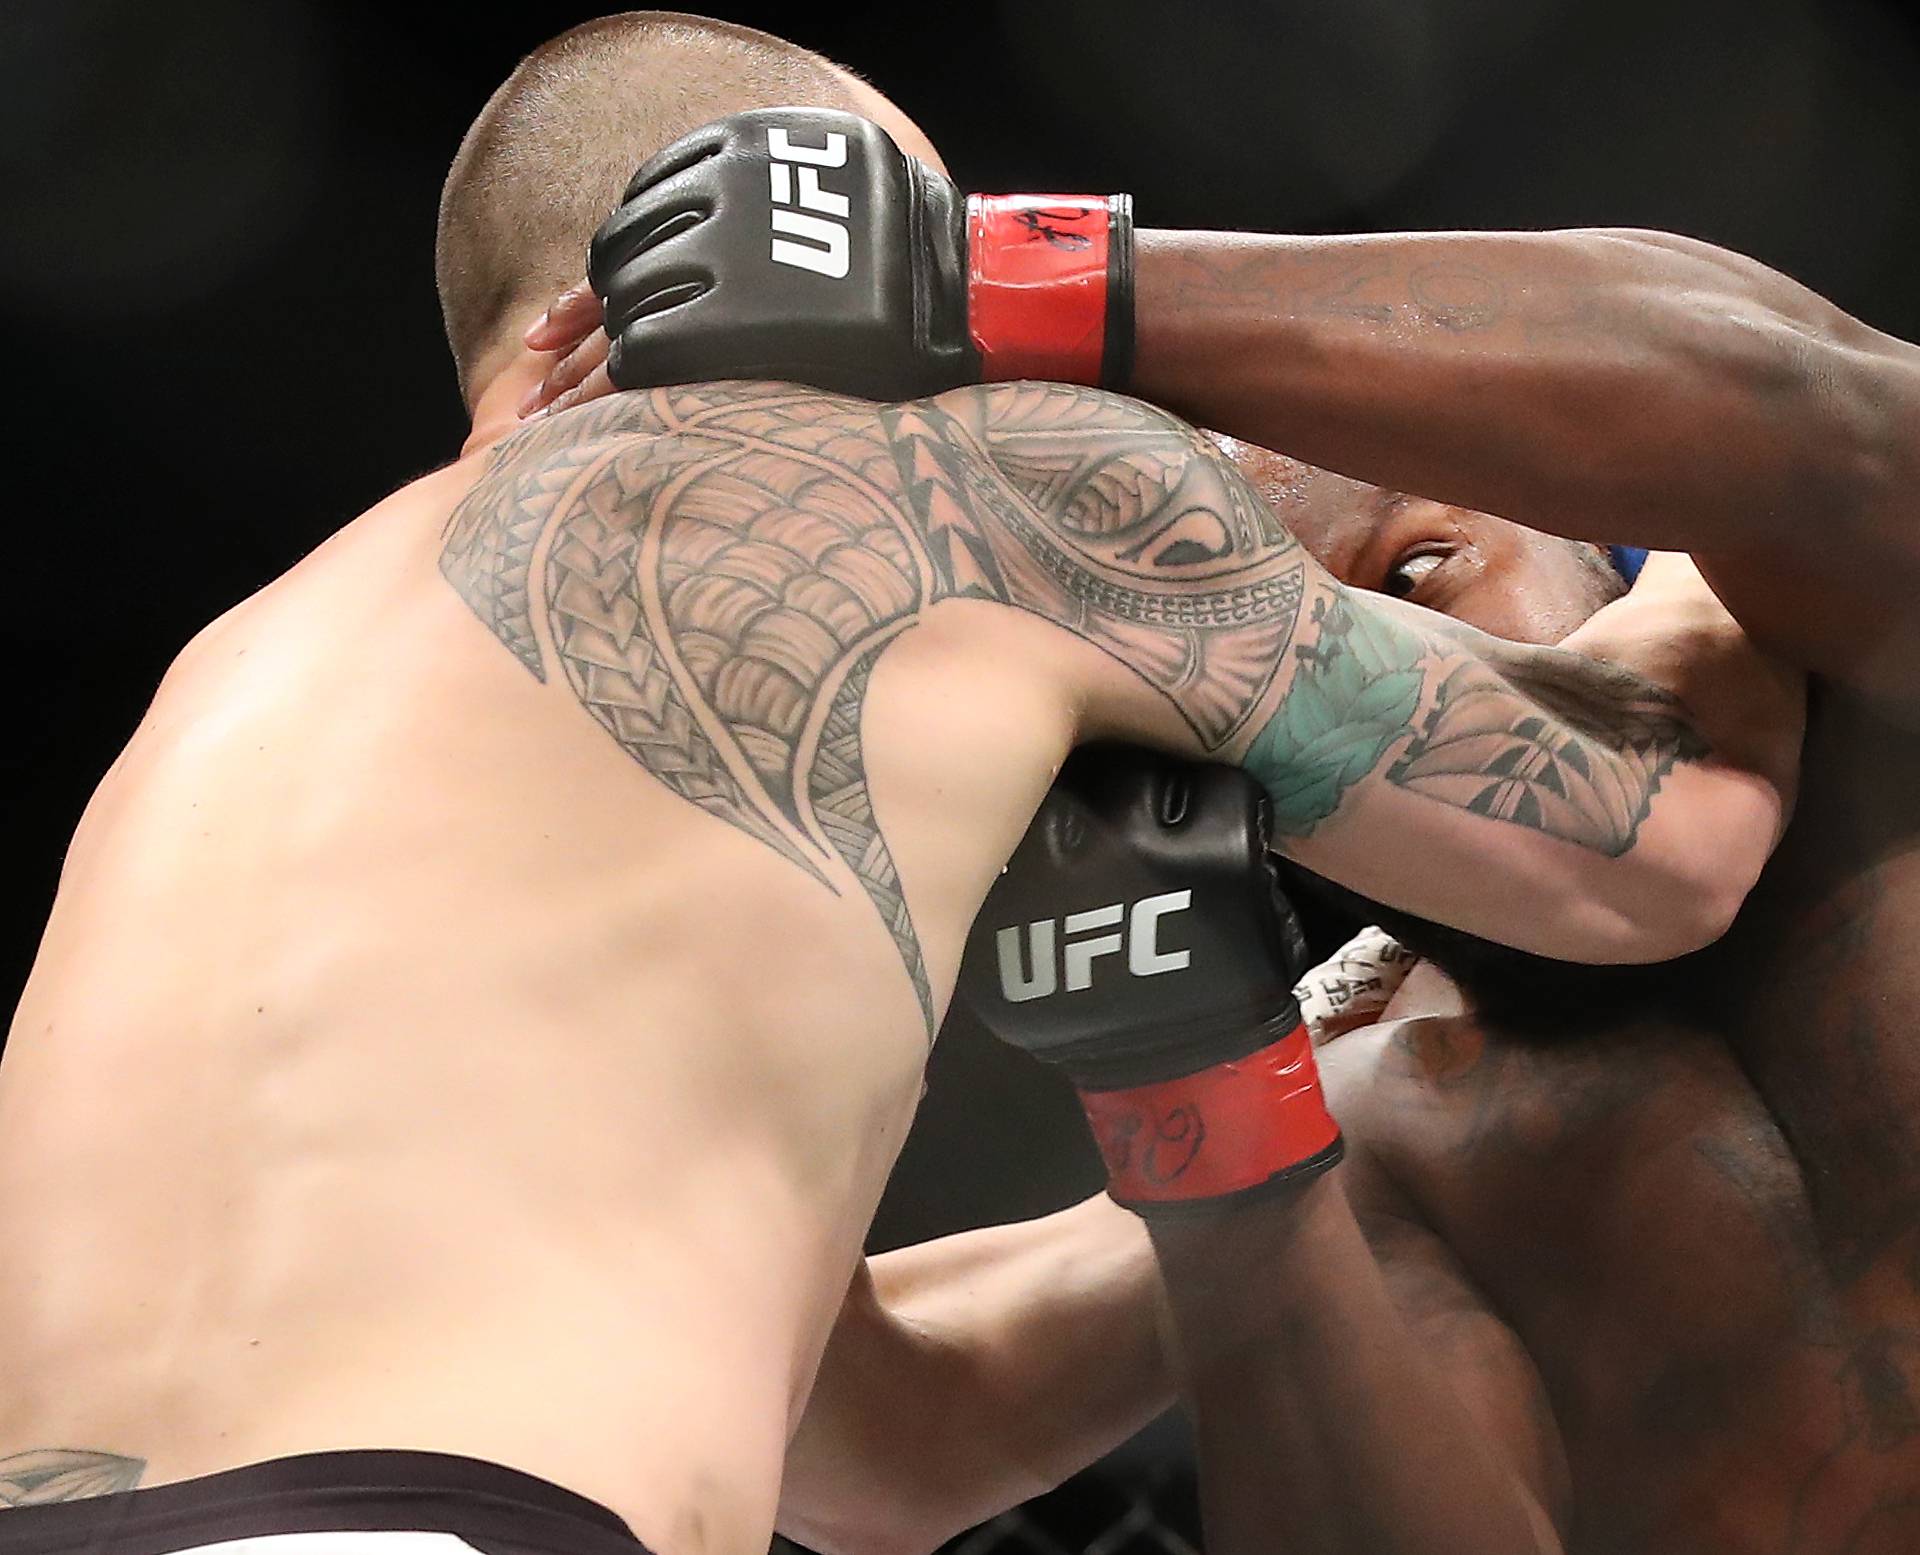 MMA: UFC Fight Night-Lewis vs Browne